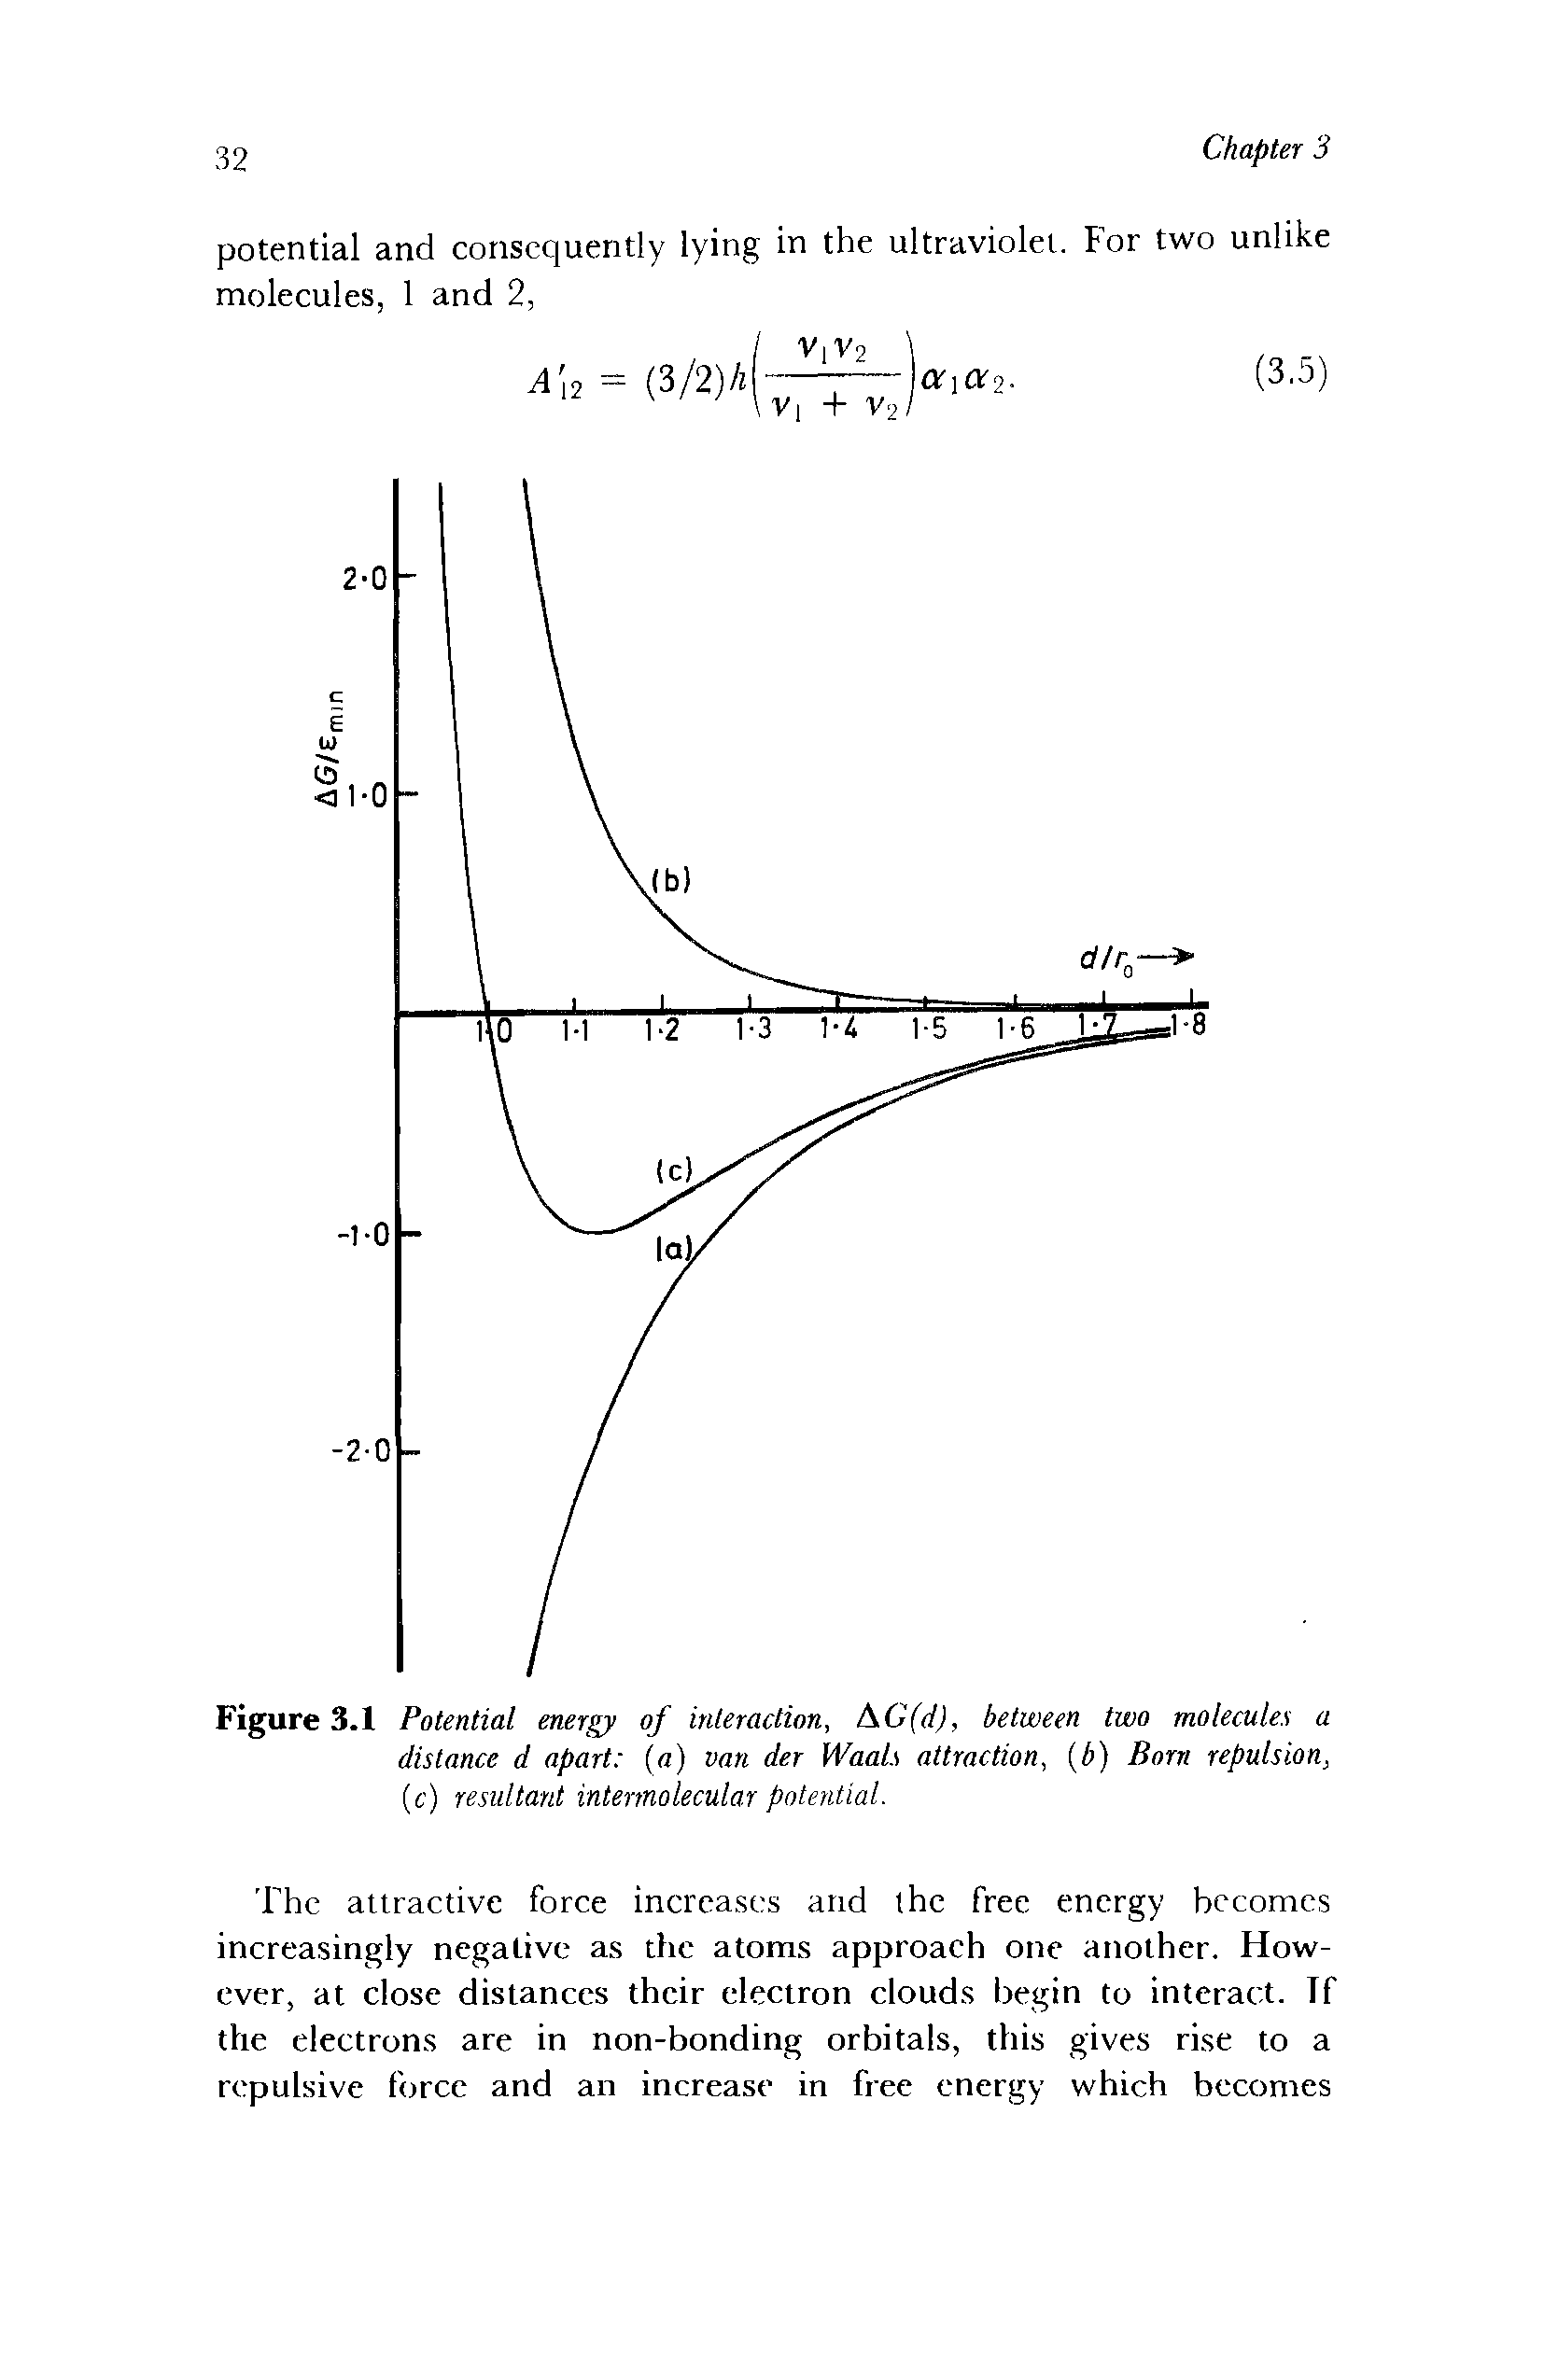 Figure 3.1 Potential energy of interaction, AC(d), between two molecules a distance d apart (a) van der Waals attraction, (b) Born repulsion, (c) resultant intermolecular potential.